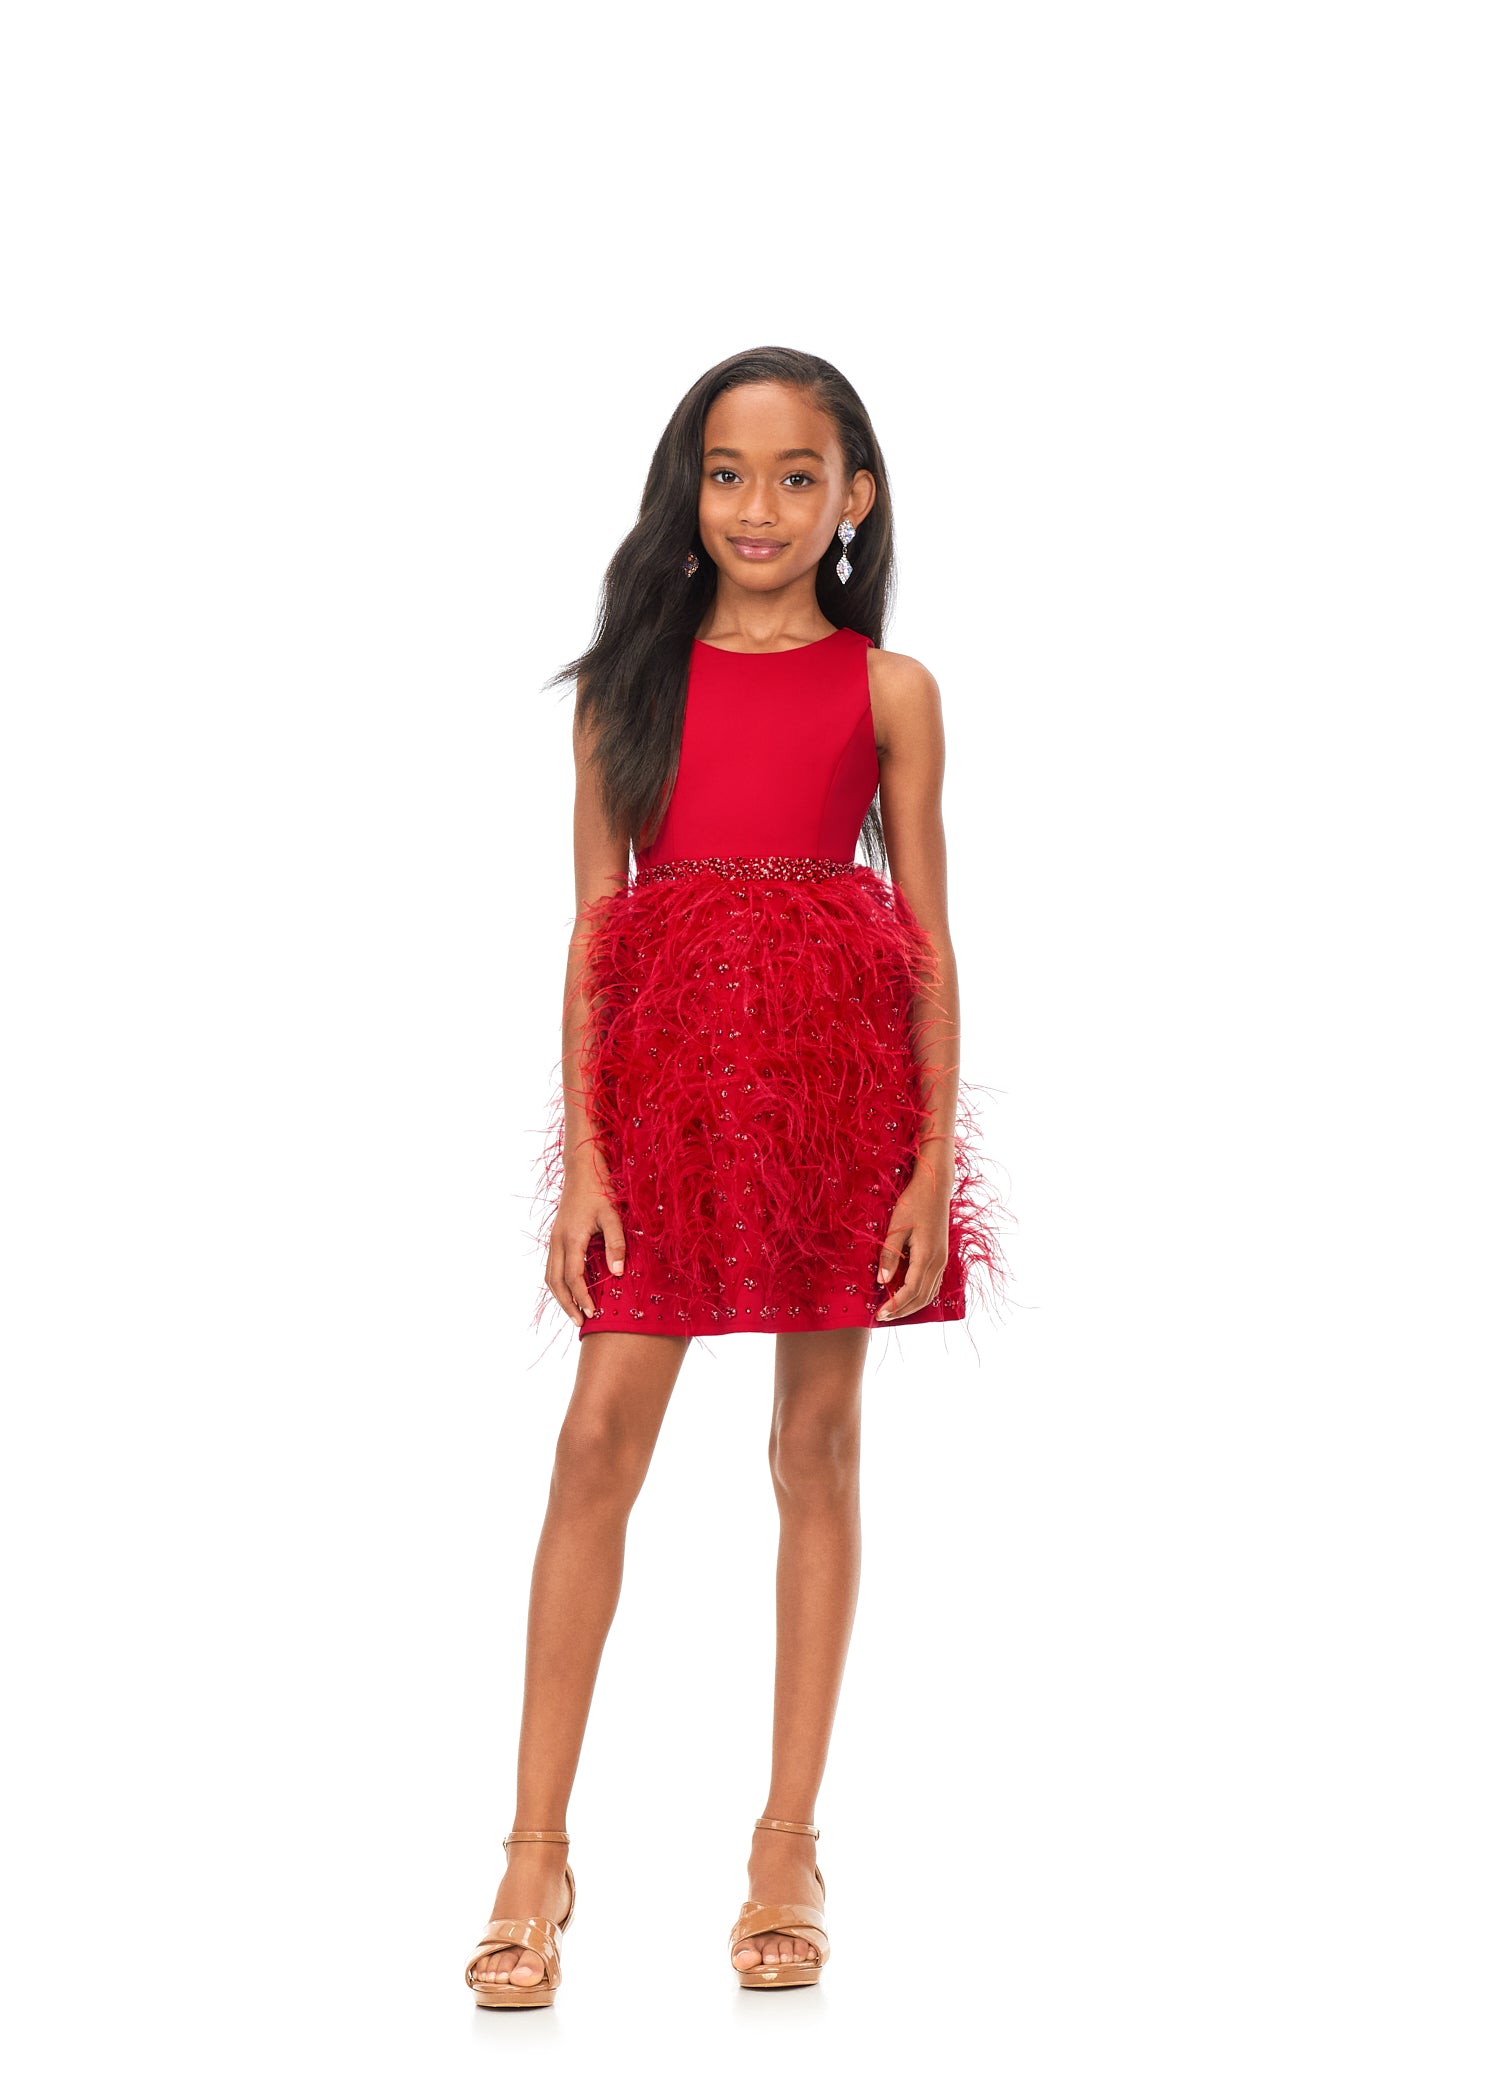 Ralph Lauren Women's Formal Dress Size 4 Red Crepe Cutout Back